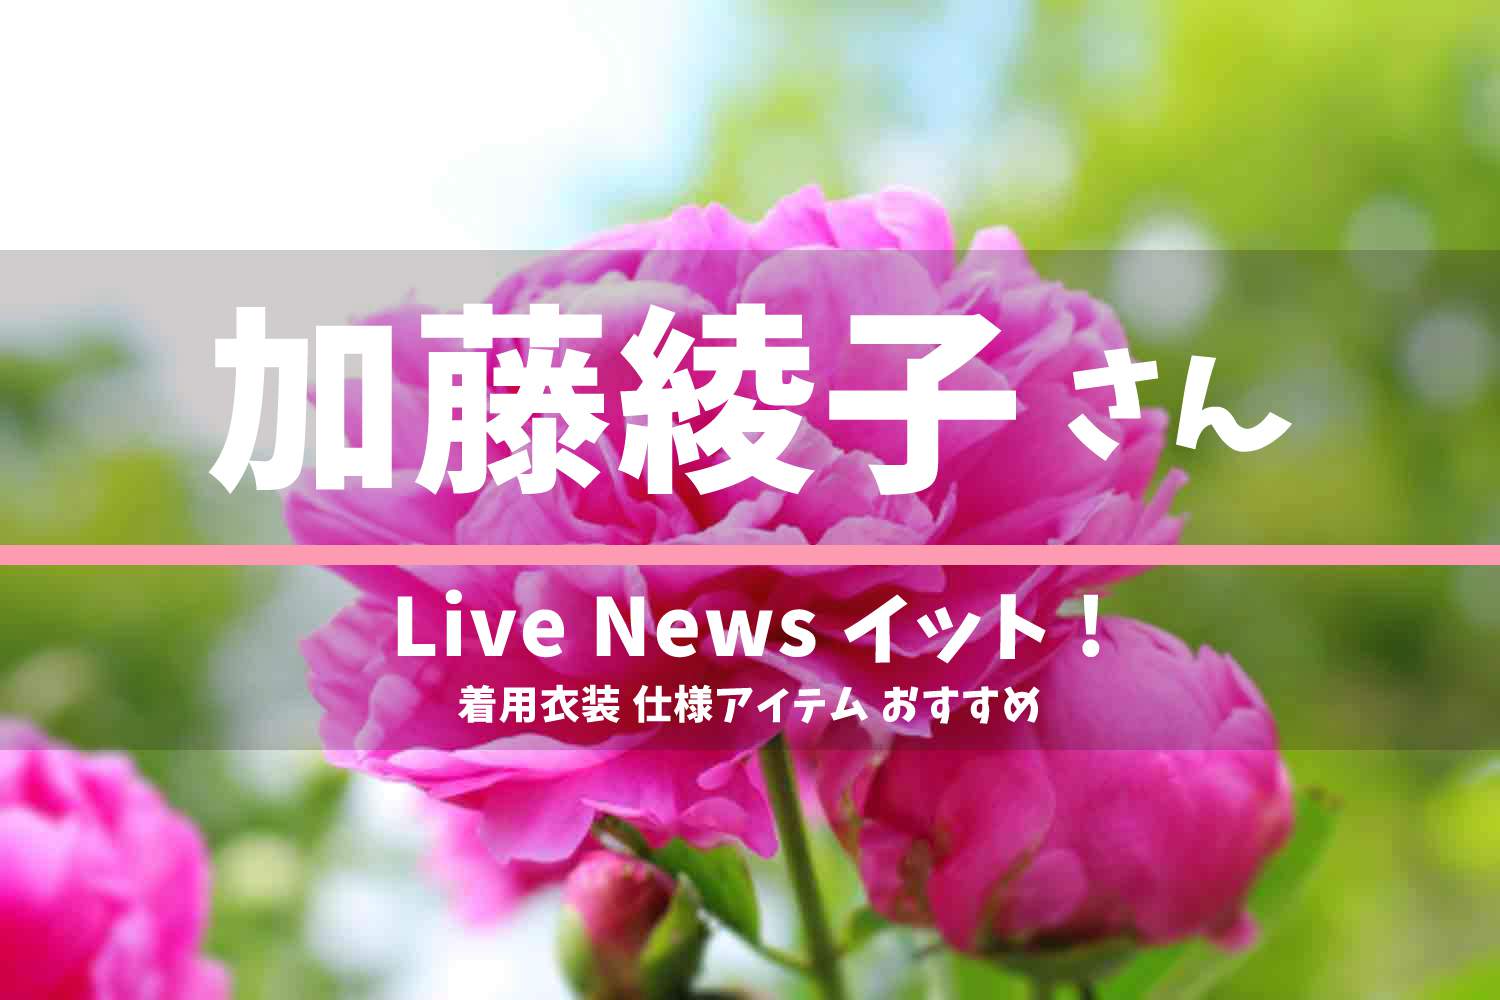 Live News イット! 加藤綾子さん 番組 衣装 2022年7月7日放送